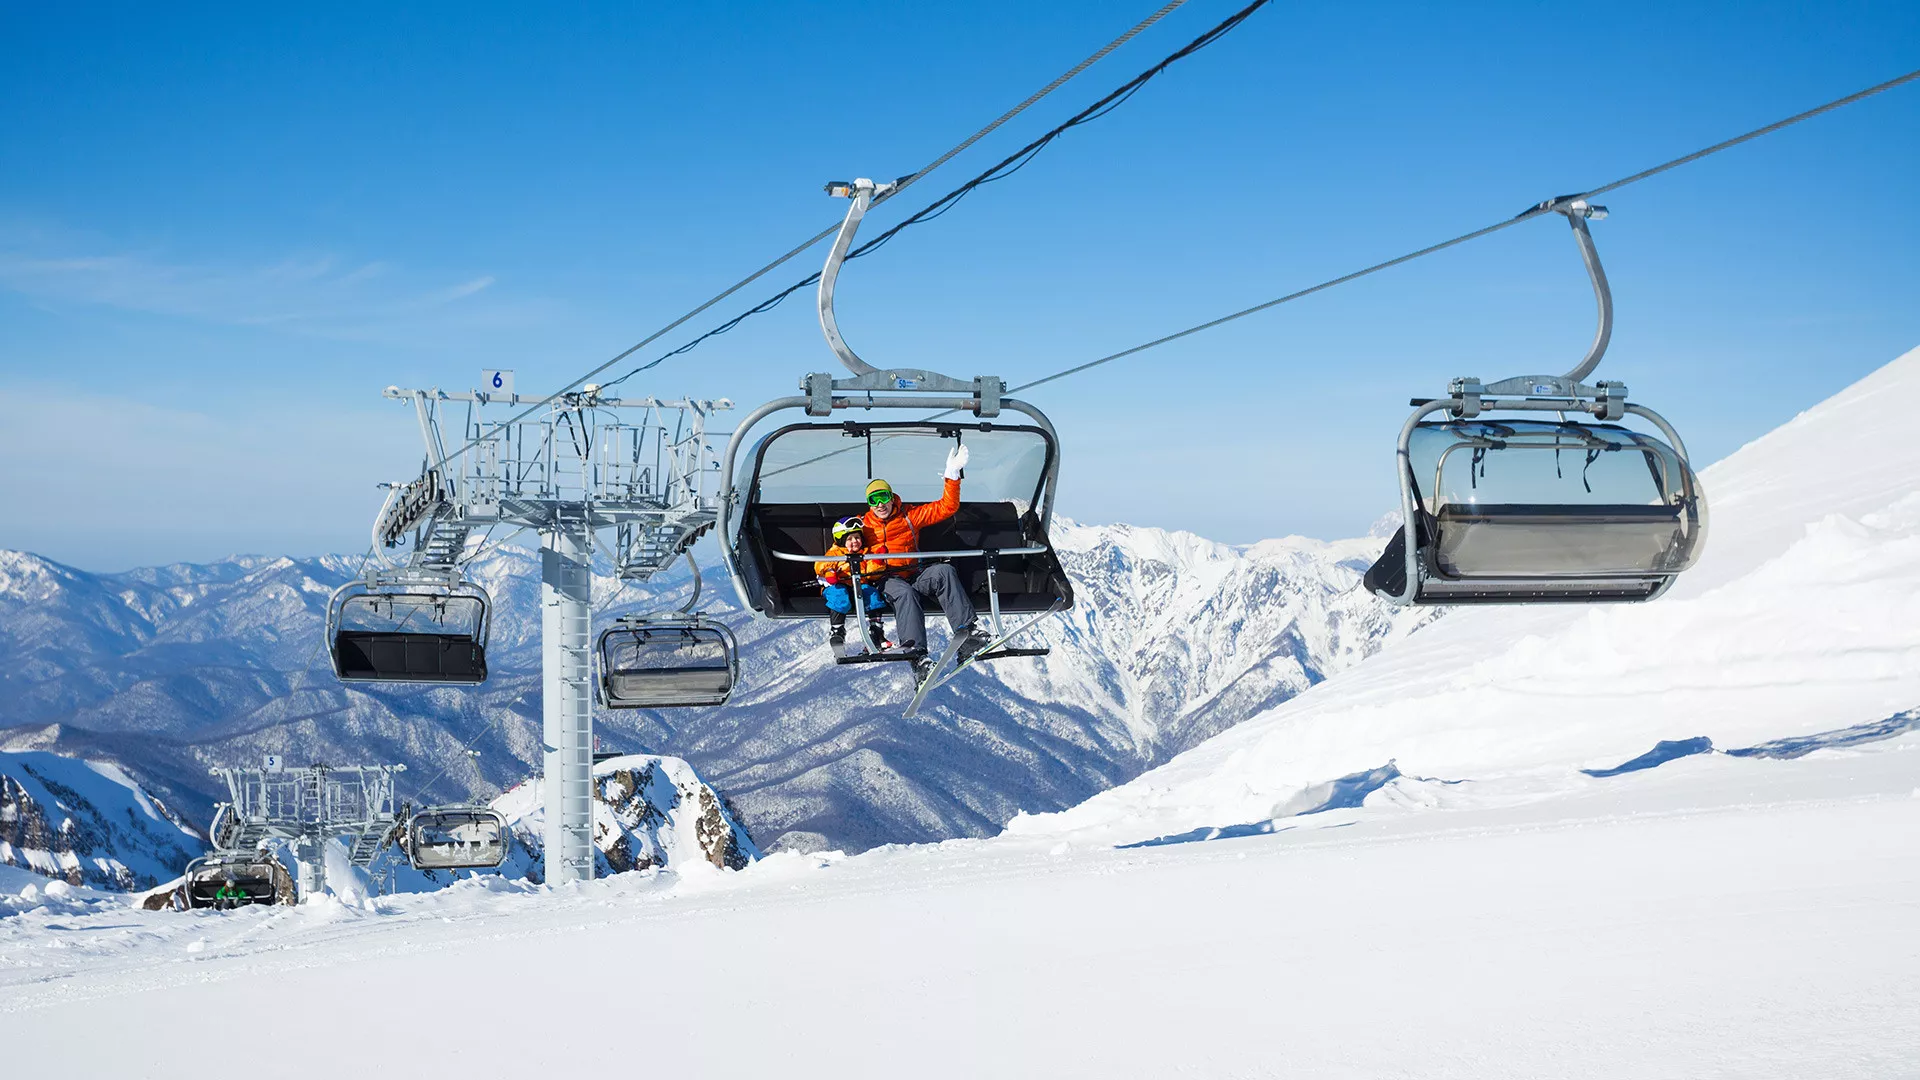 Gazprom Ski Resort in Russia, Europe | Snowboarding,Skiing,Snowmobiling - Rated 6.5